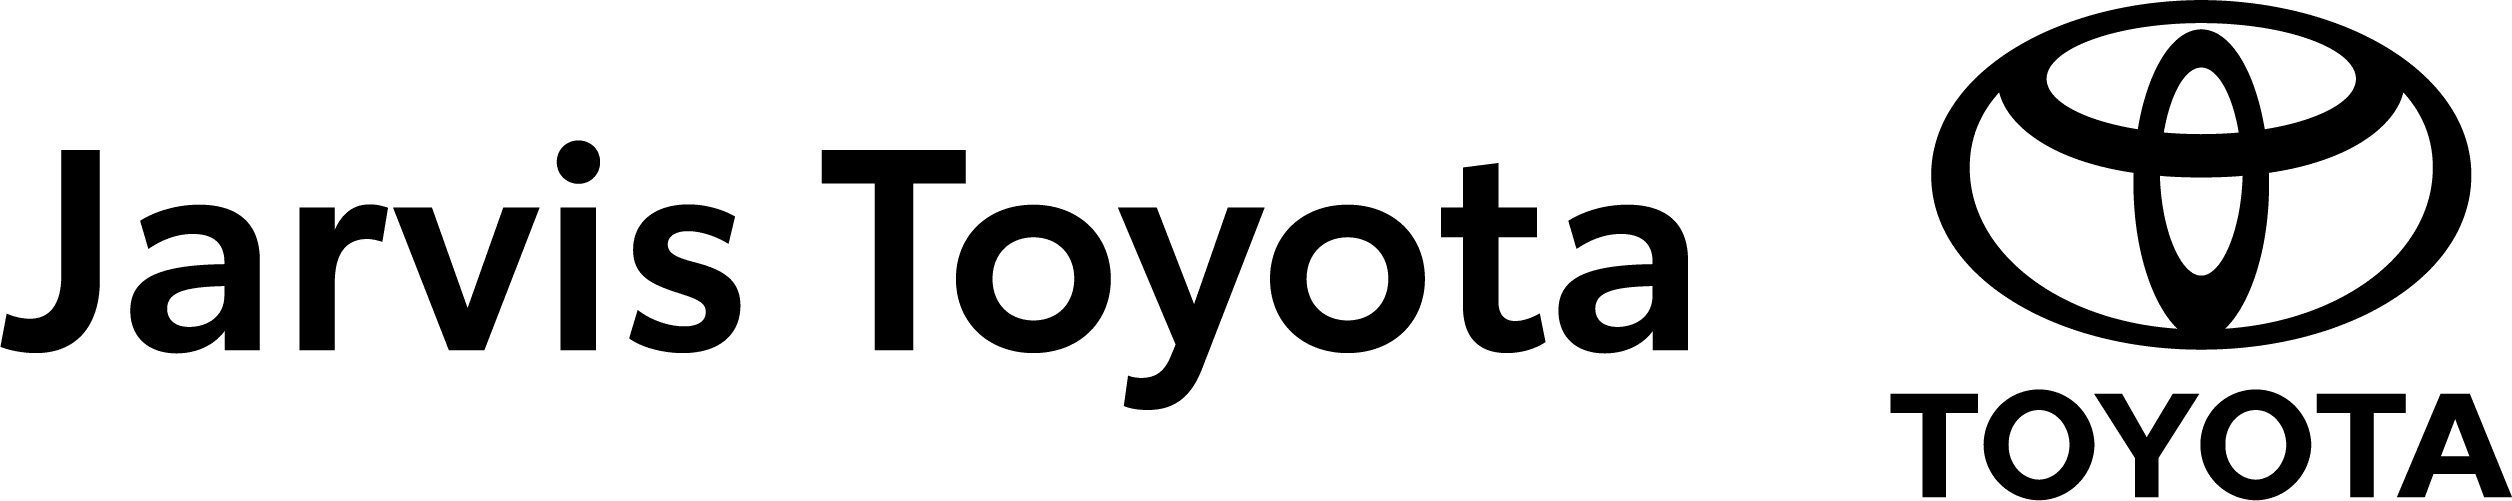 Jarvis Toyota logo